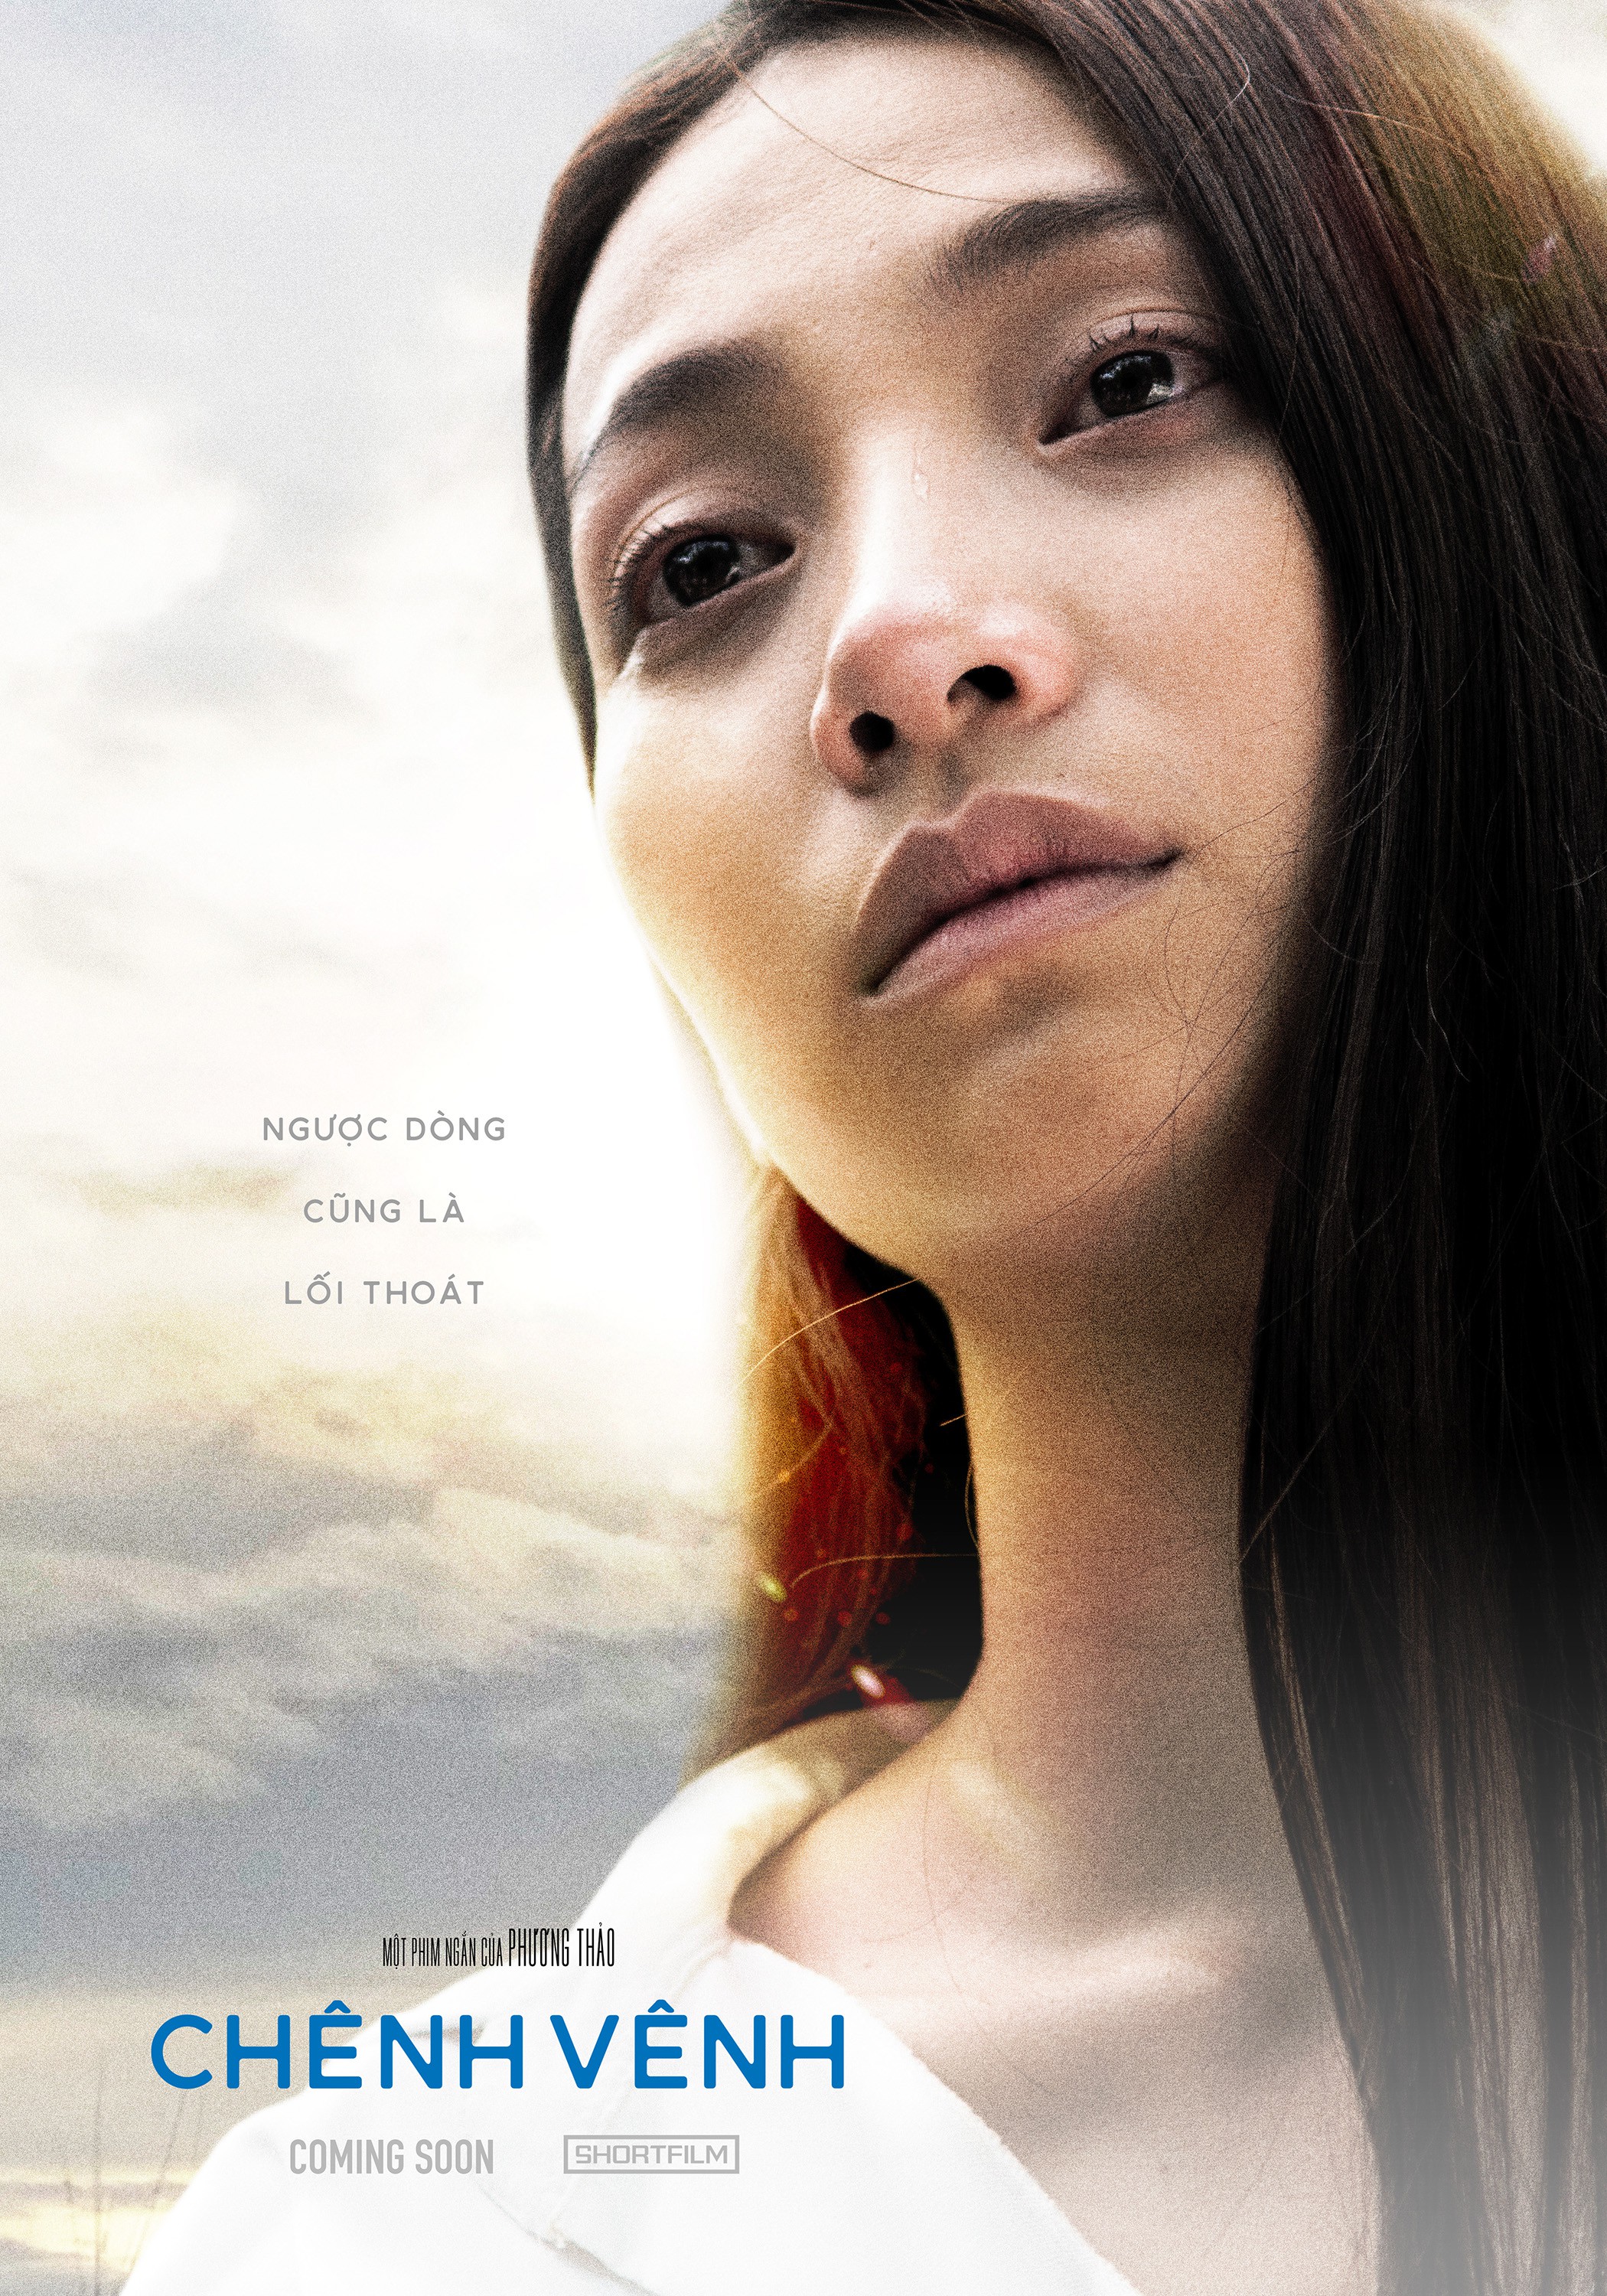 Mega Sized Movie Poster Image for Chnh Vnh